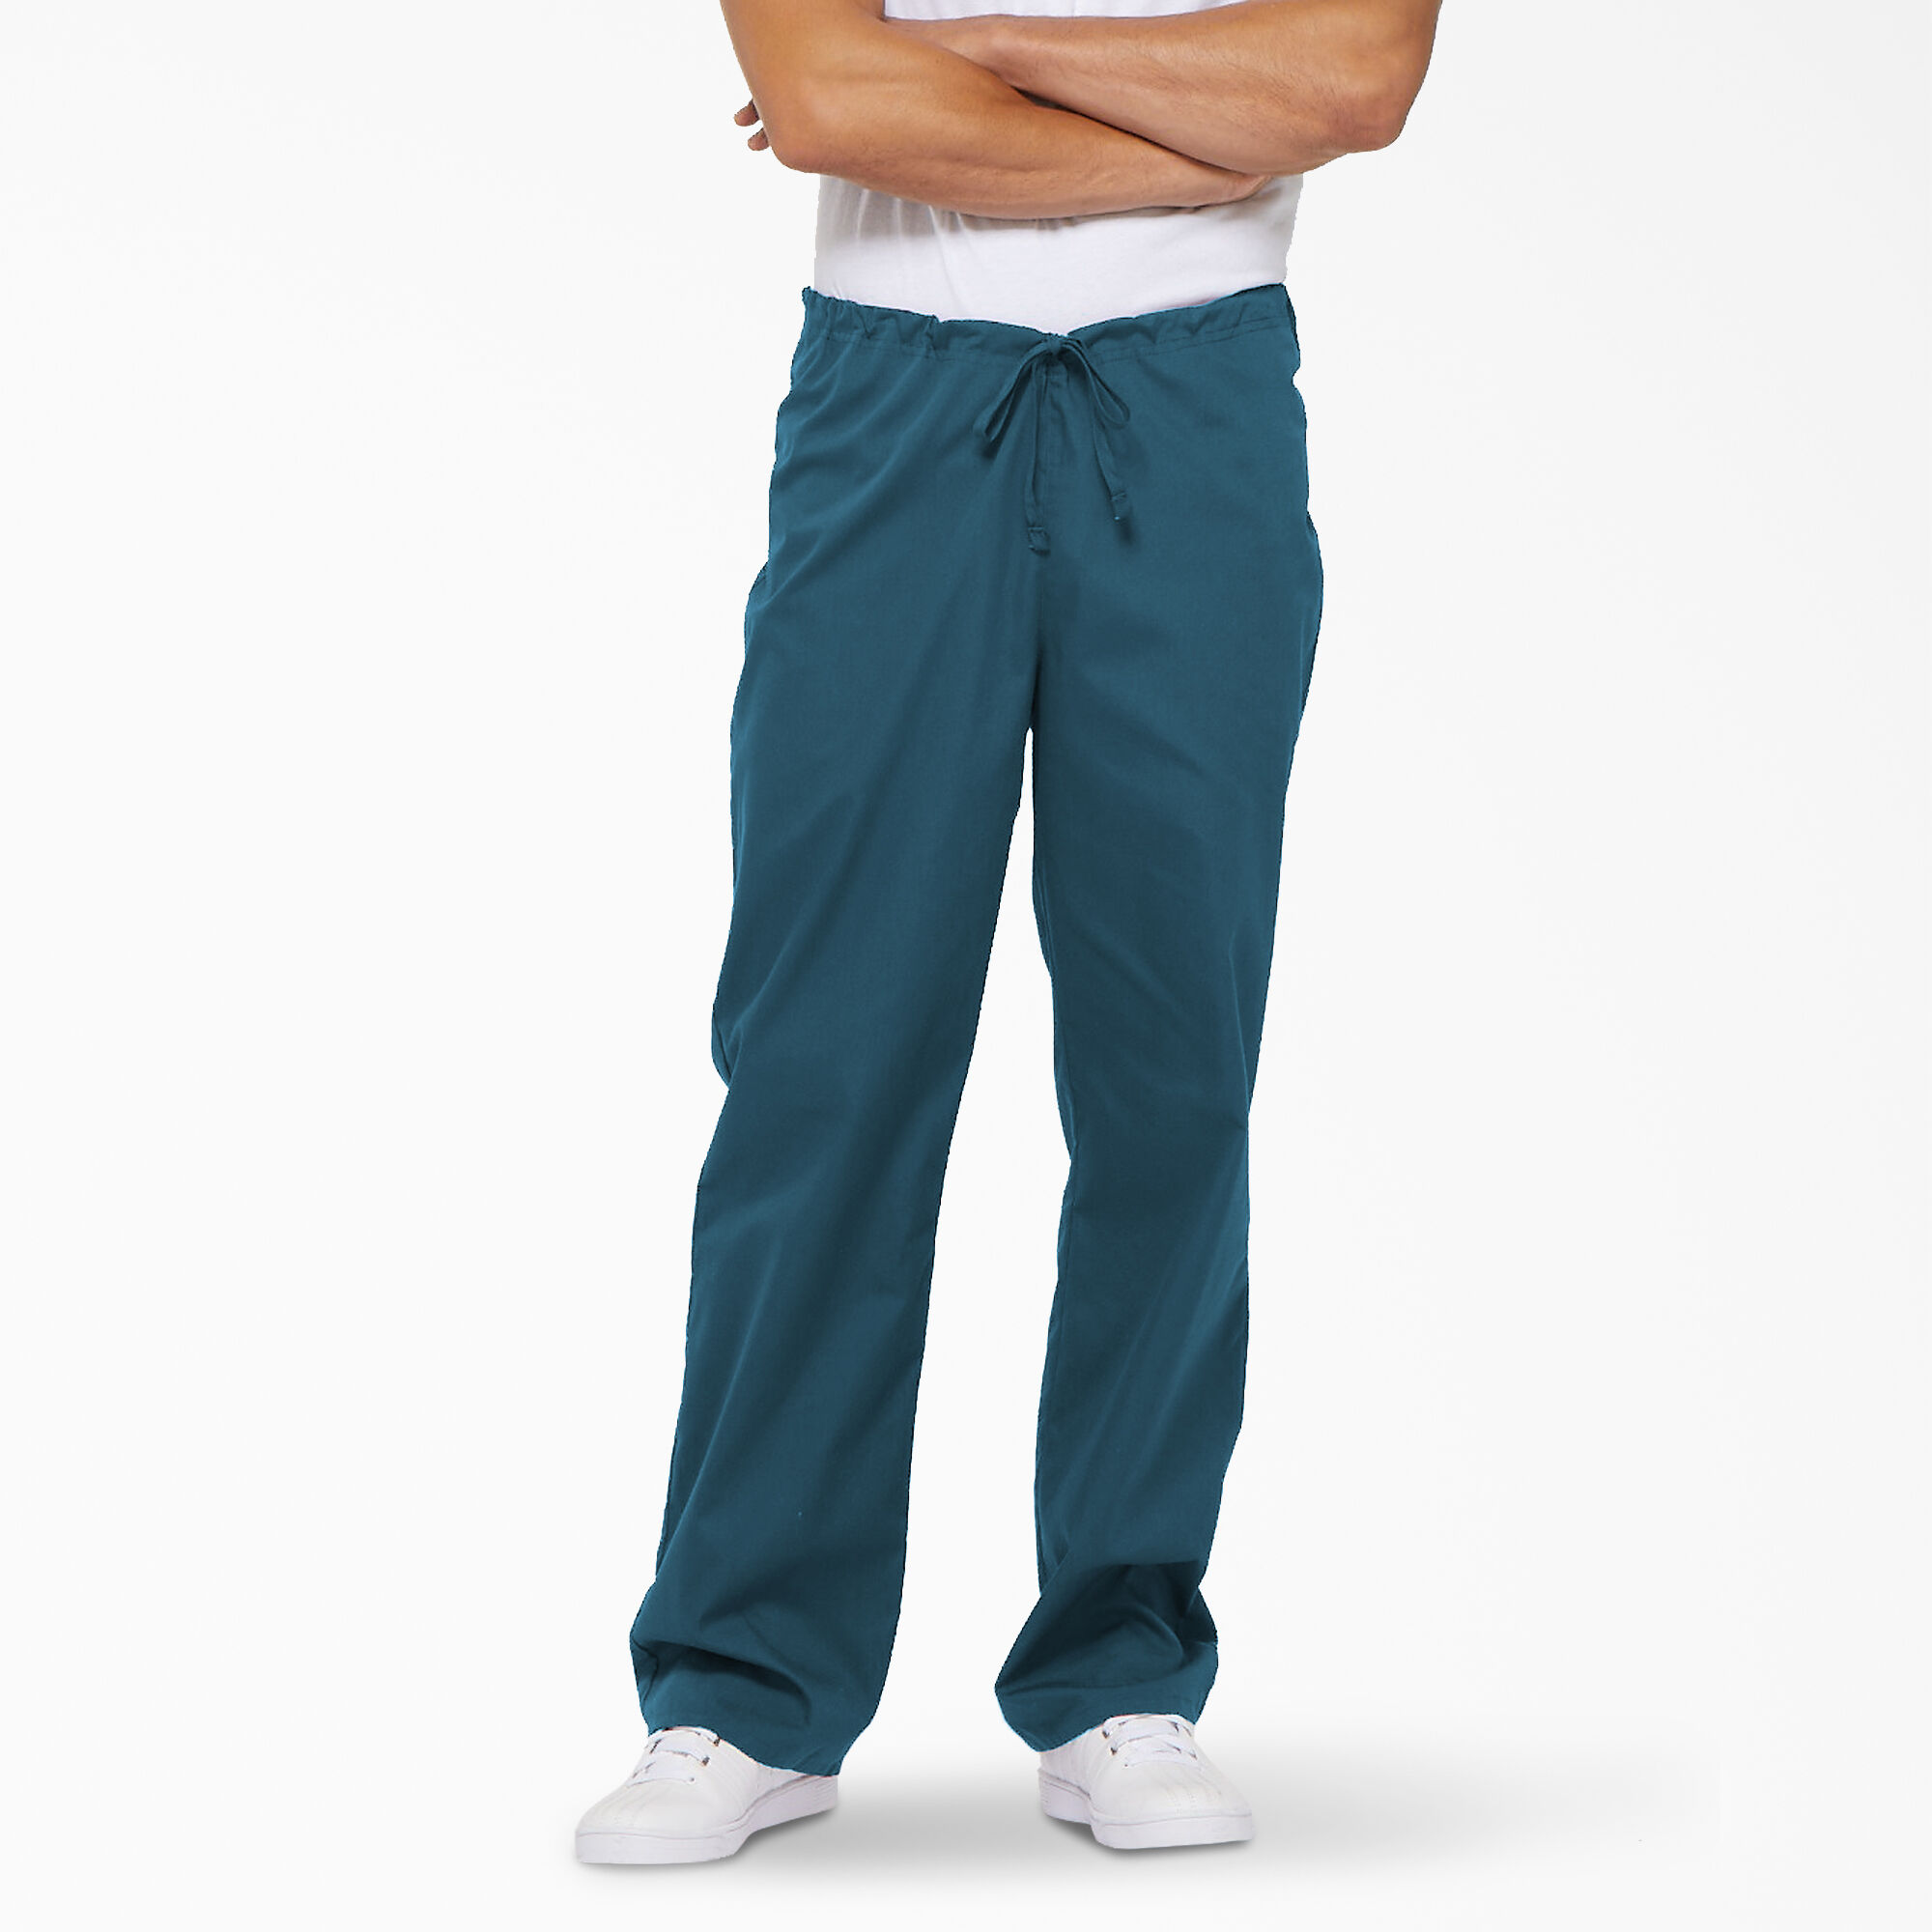 Visita lo Store di DickiesDickies Pantaloni da Uomo con Zip Fly Pull-on Scrubs Camice Medico 